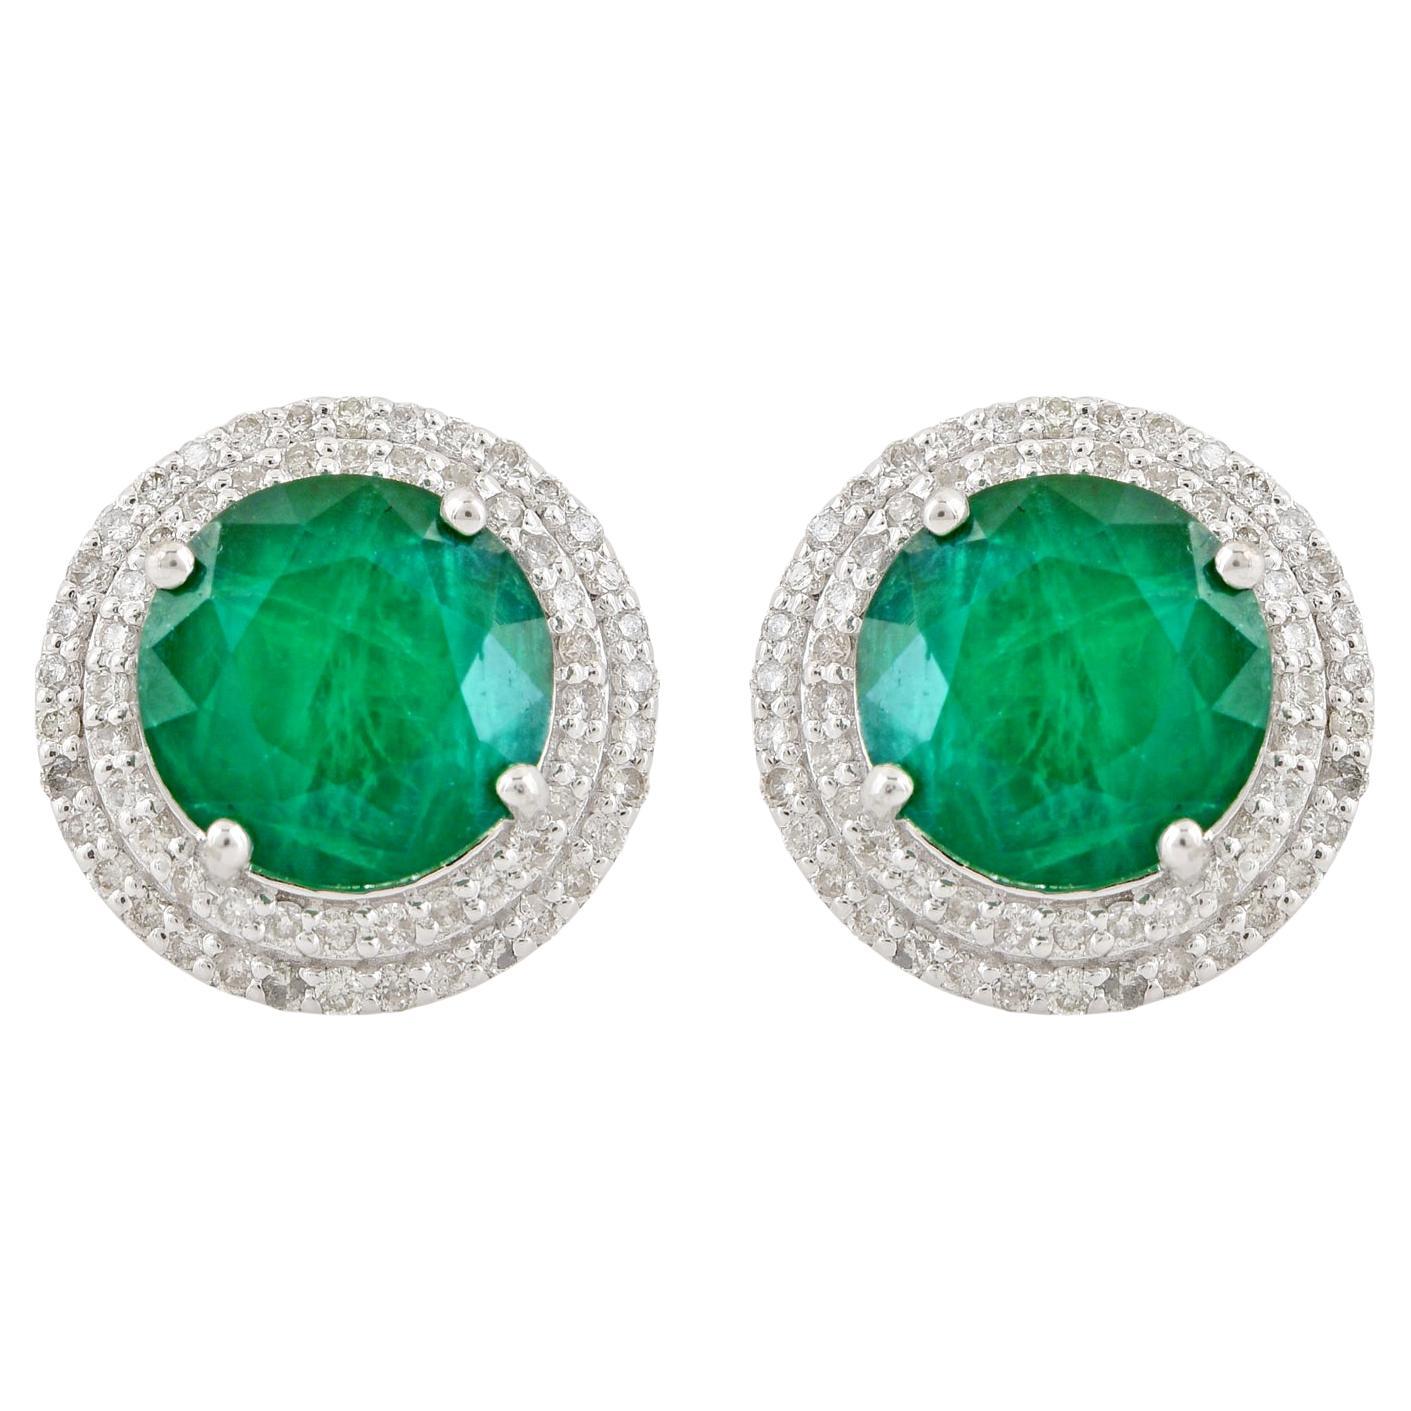 Zambian Emerald Gemstone Stud Earrings Diamond Pave Solid 18k White Gold Jewelry